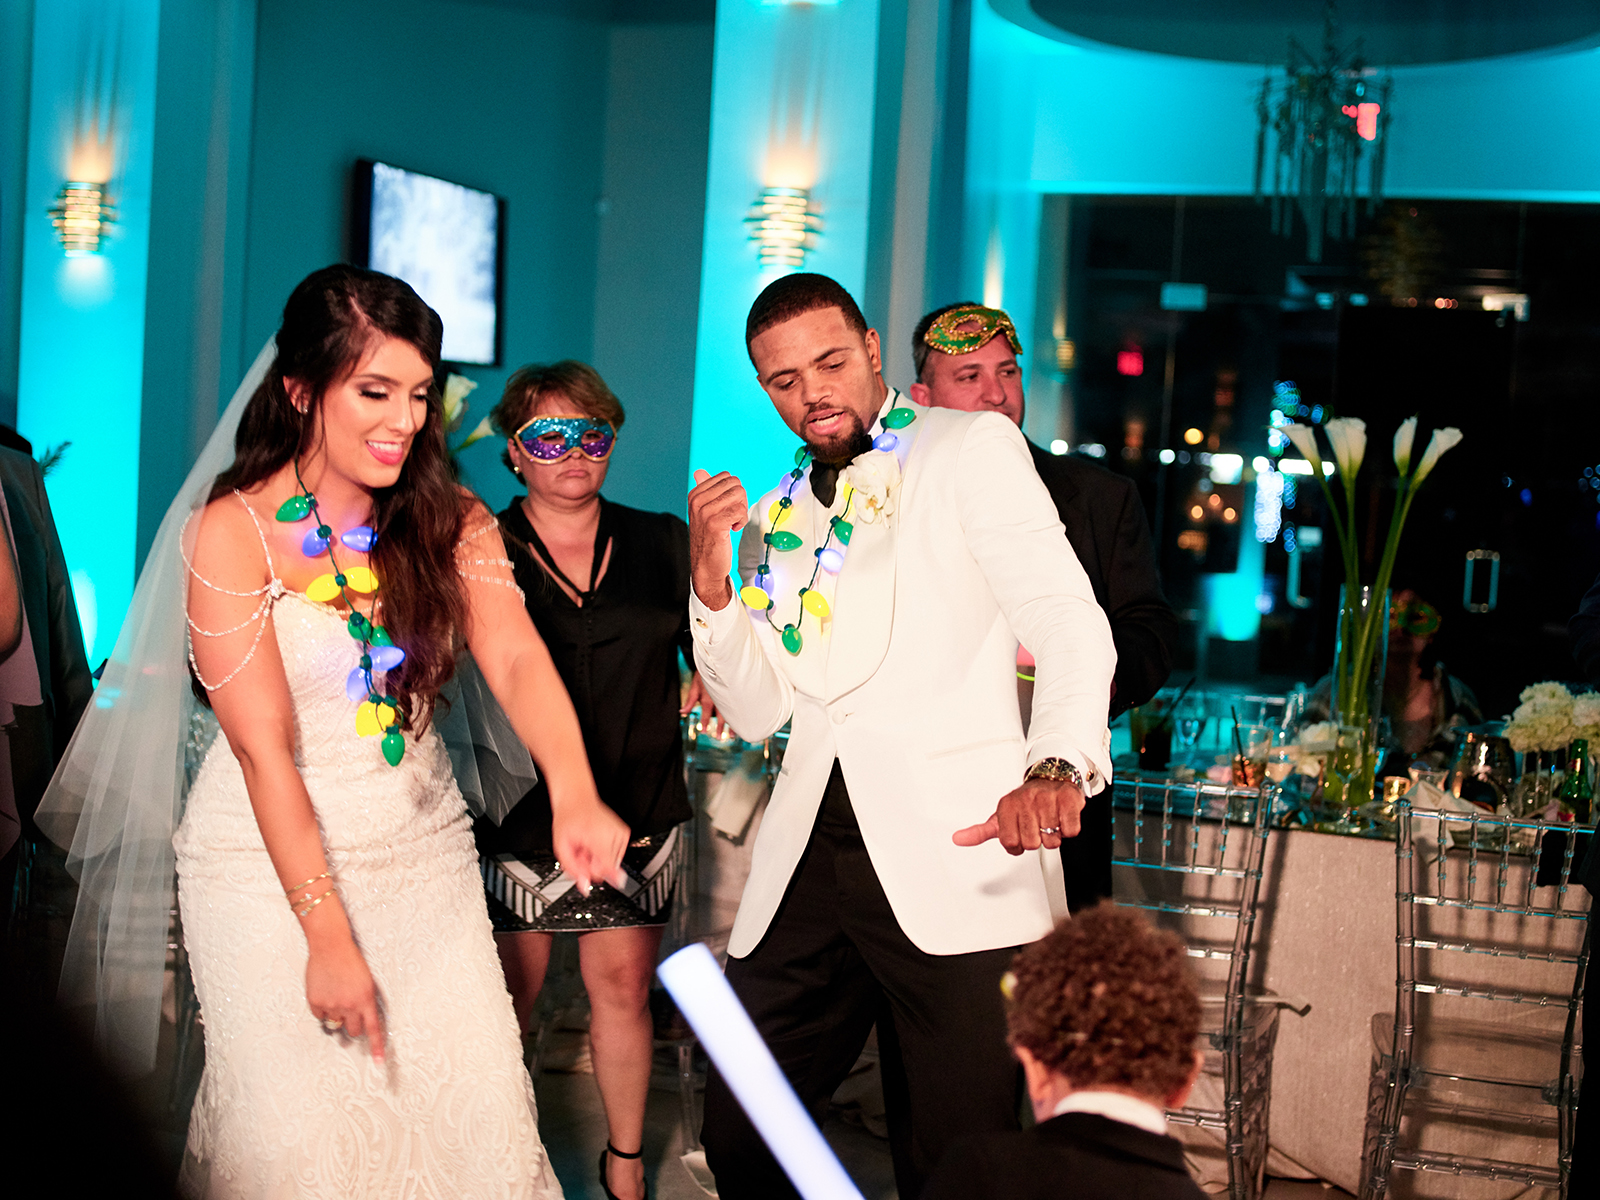 wedding entertainment - dancing - glow sticks 